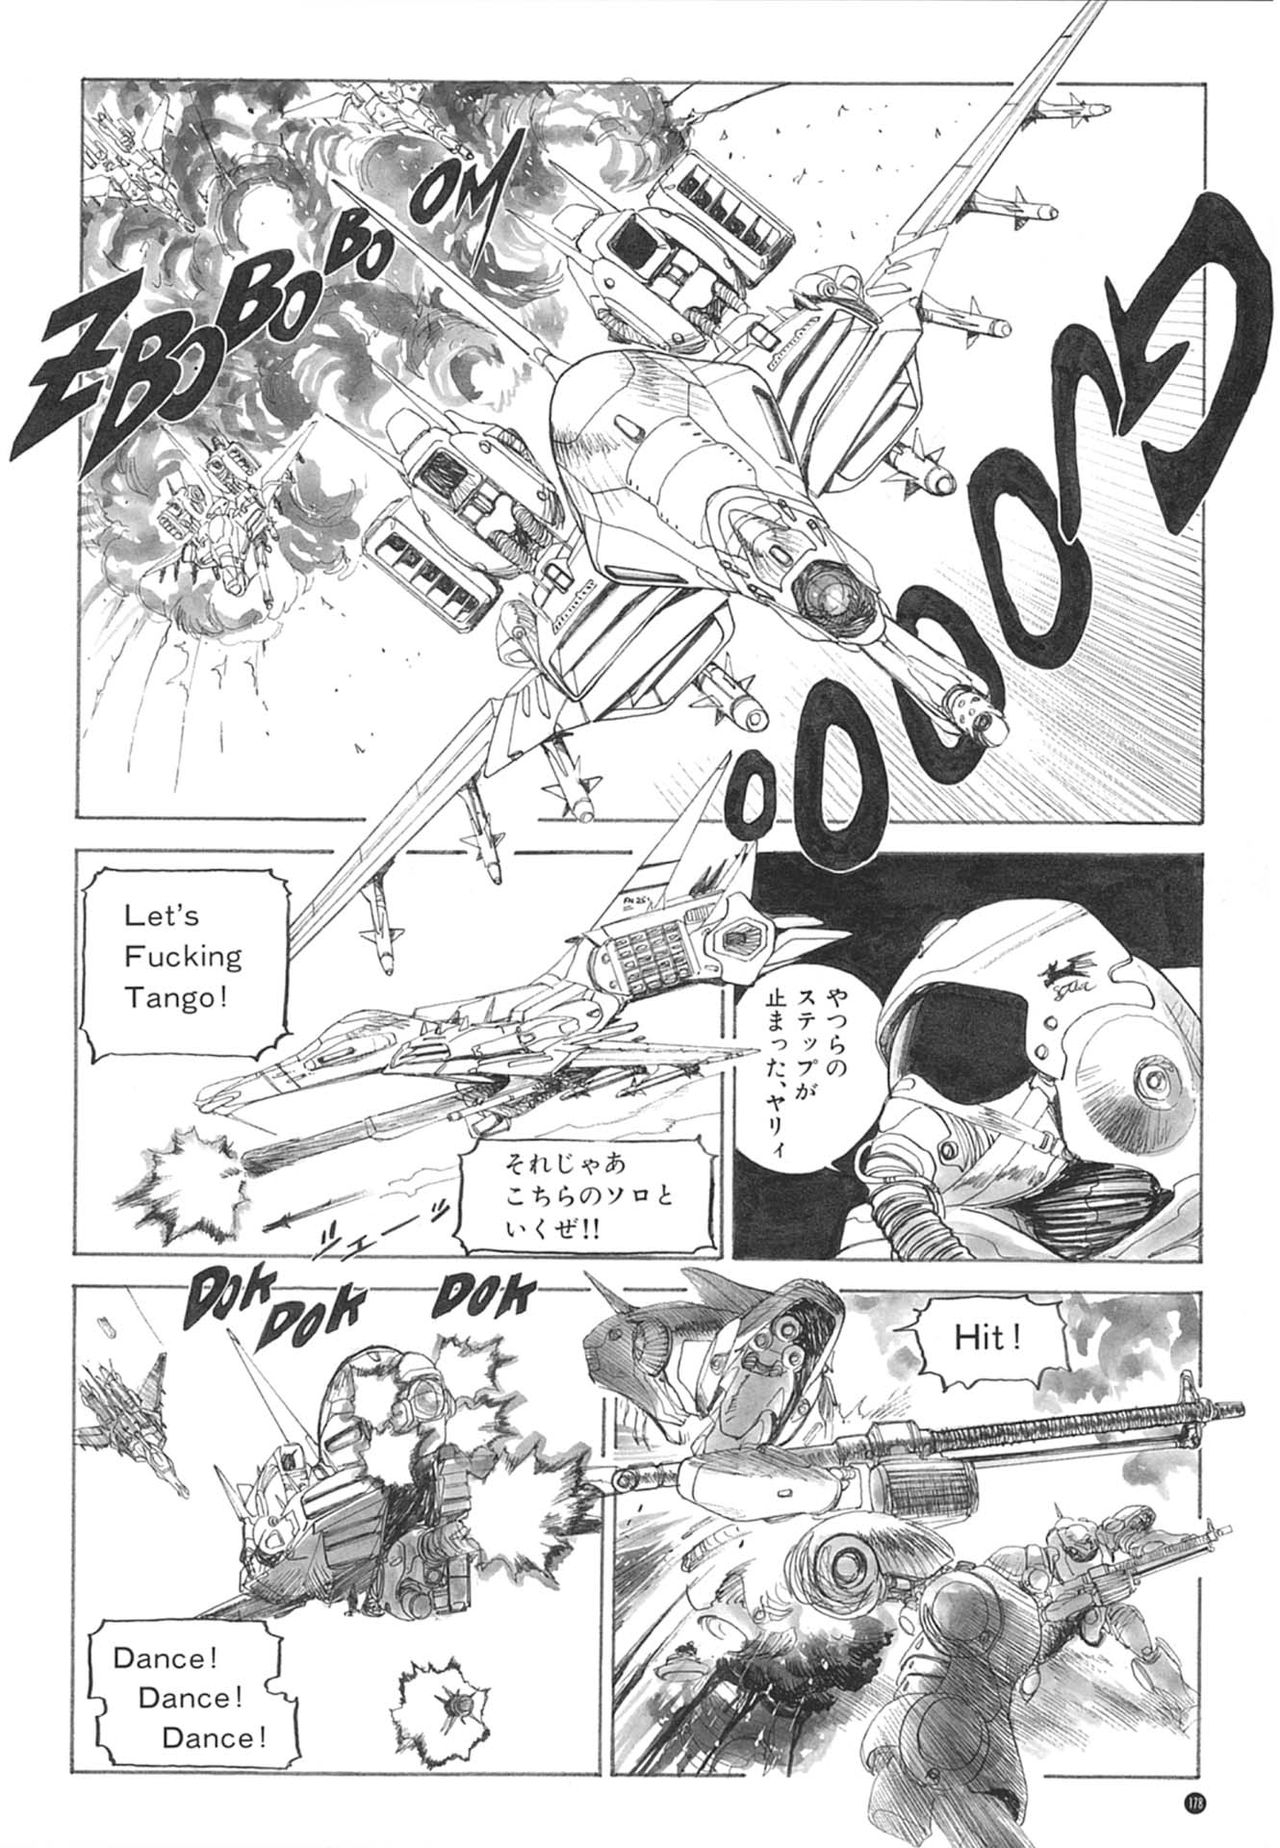 [Kazuhisa Kondo] Kazuhisa Kondo 2D & 3D Works - Go Ahead - From Mobile Suit Gundam to Original Mechanism 177